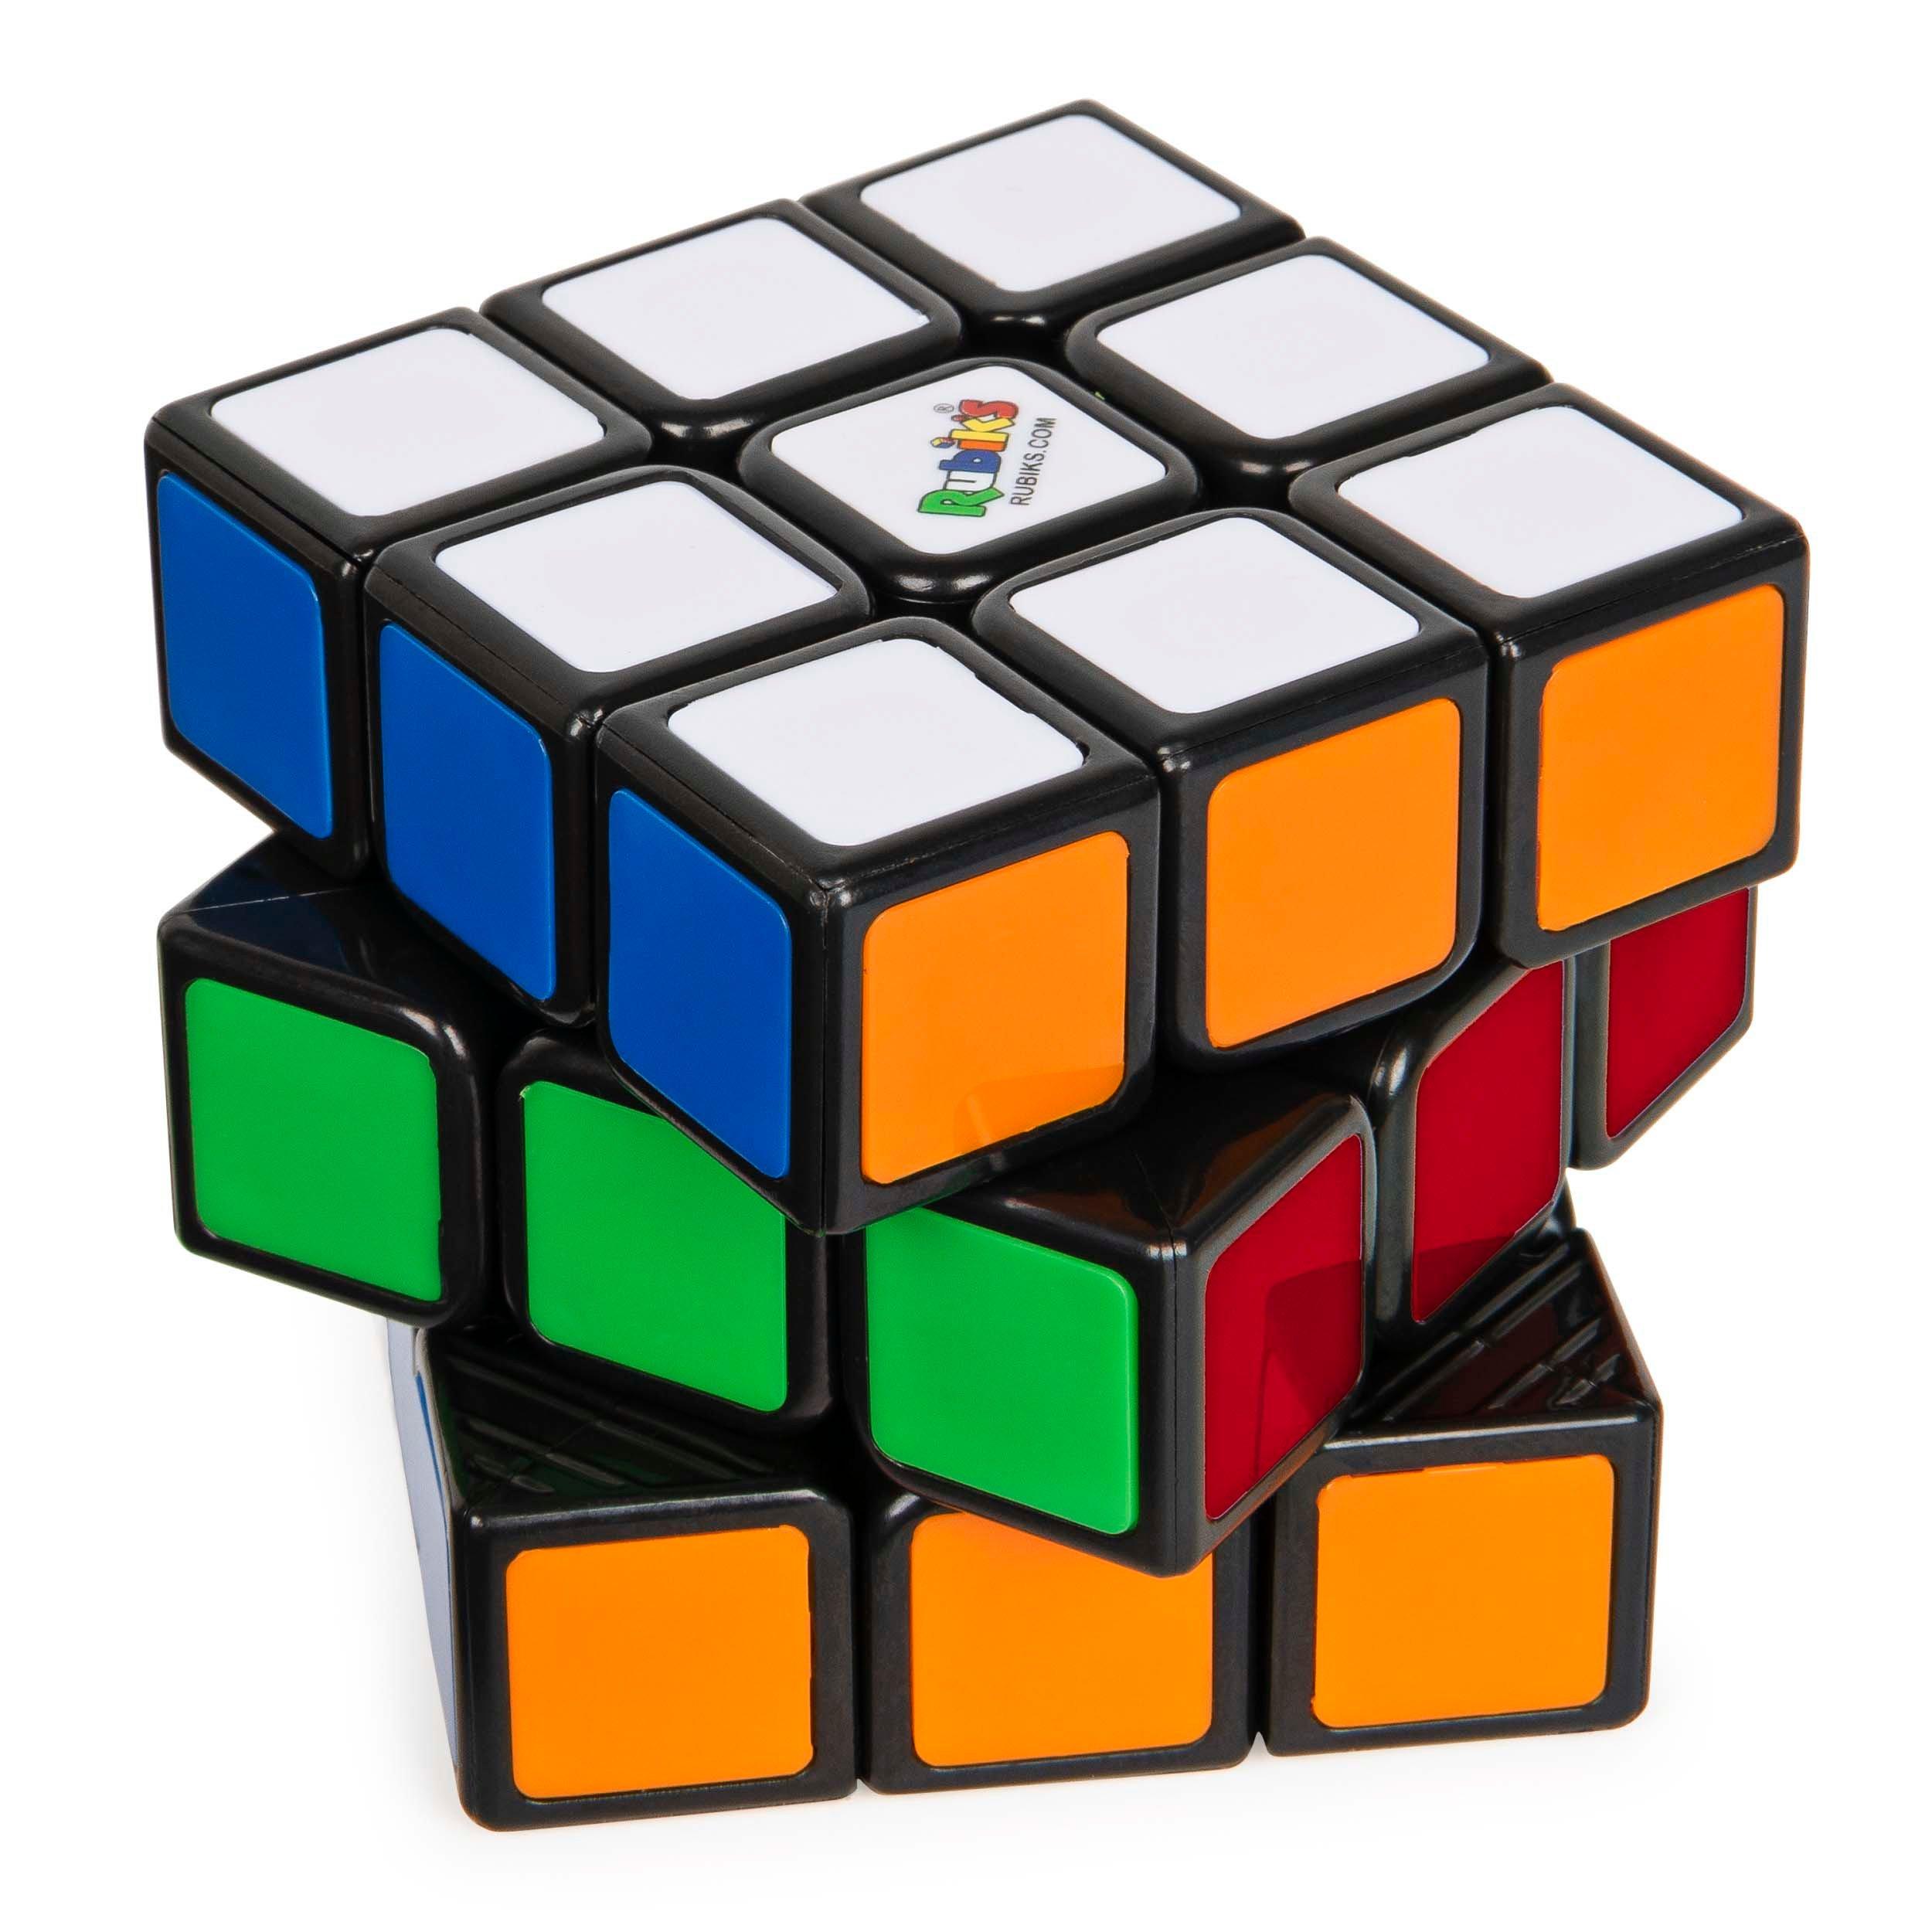 Spin Master Rubik's 3x3 Cube